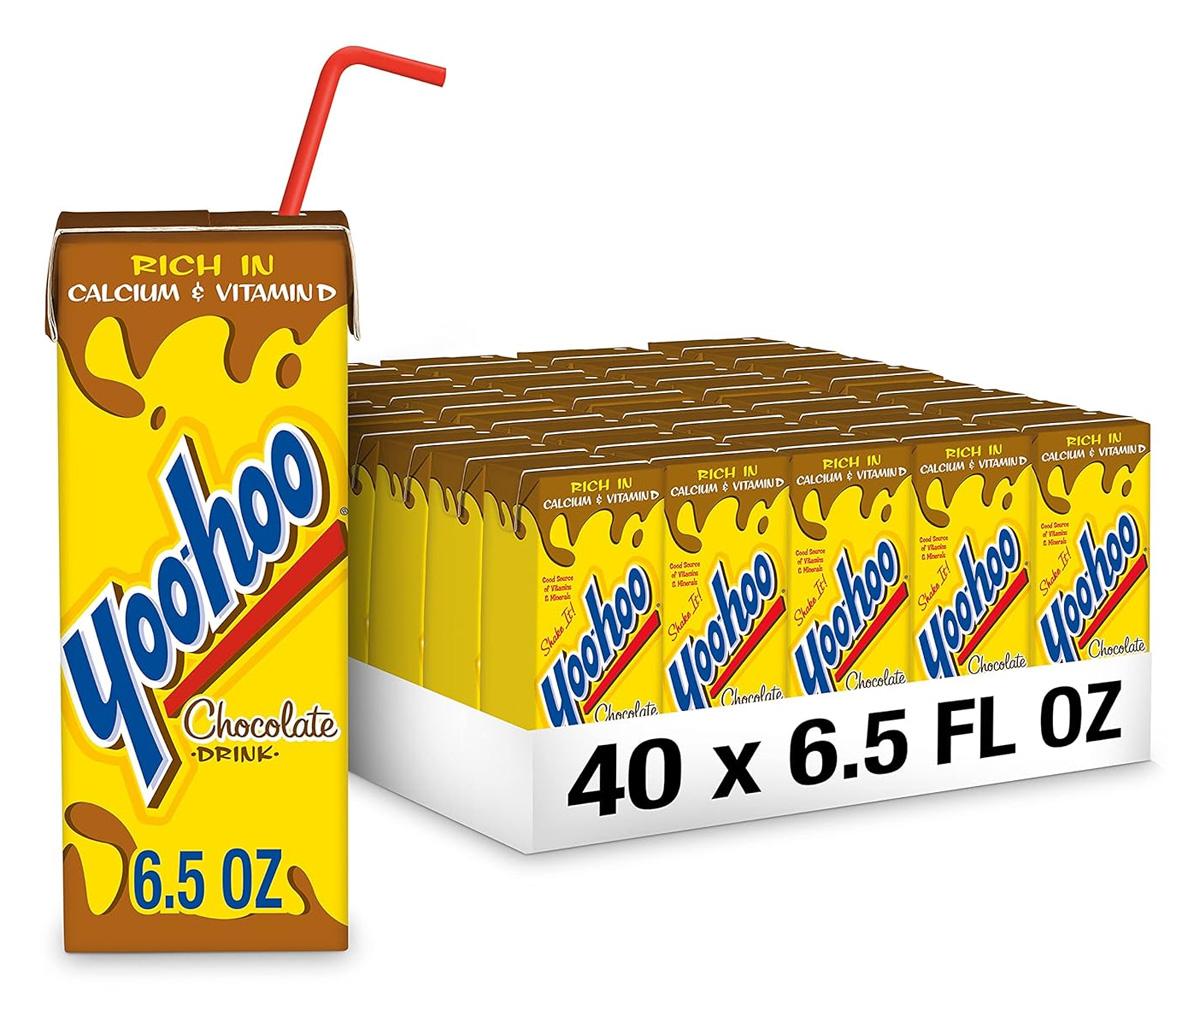 Yoo-hoo Chocolate Drink 40 Pack for $9.17